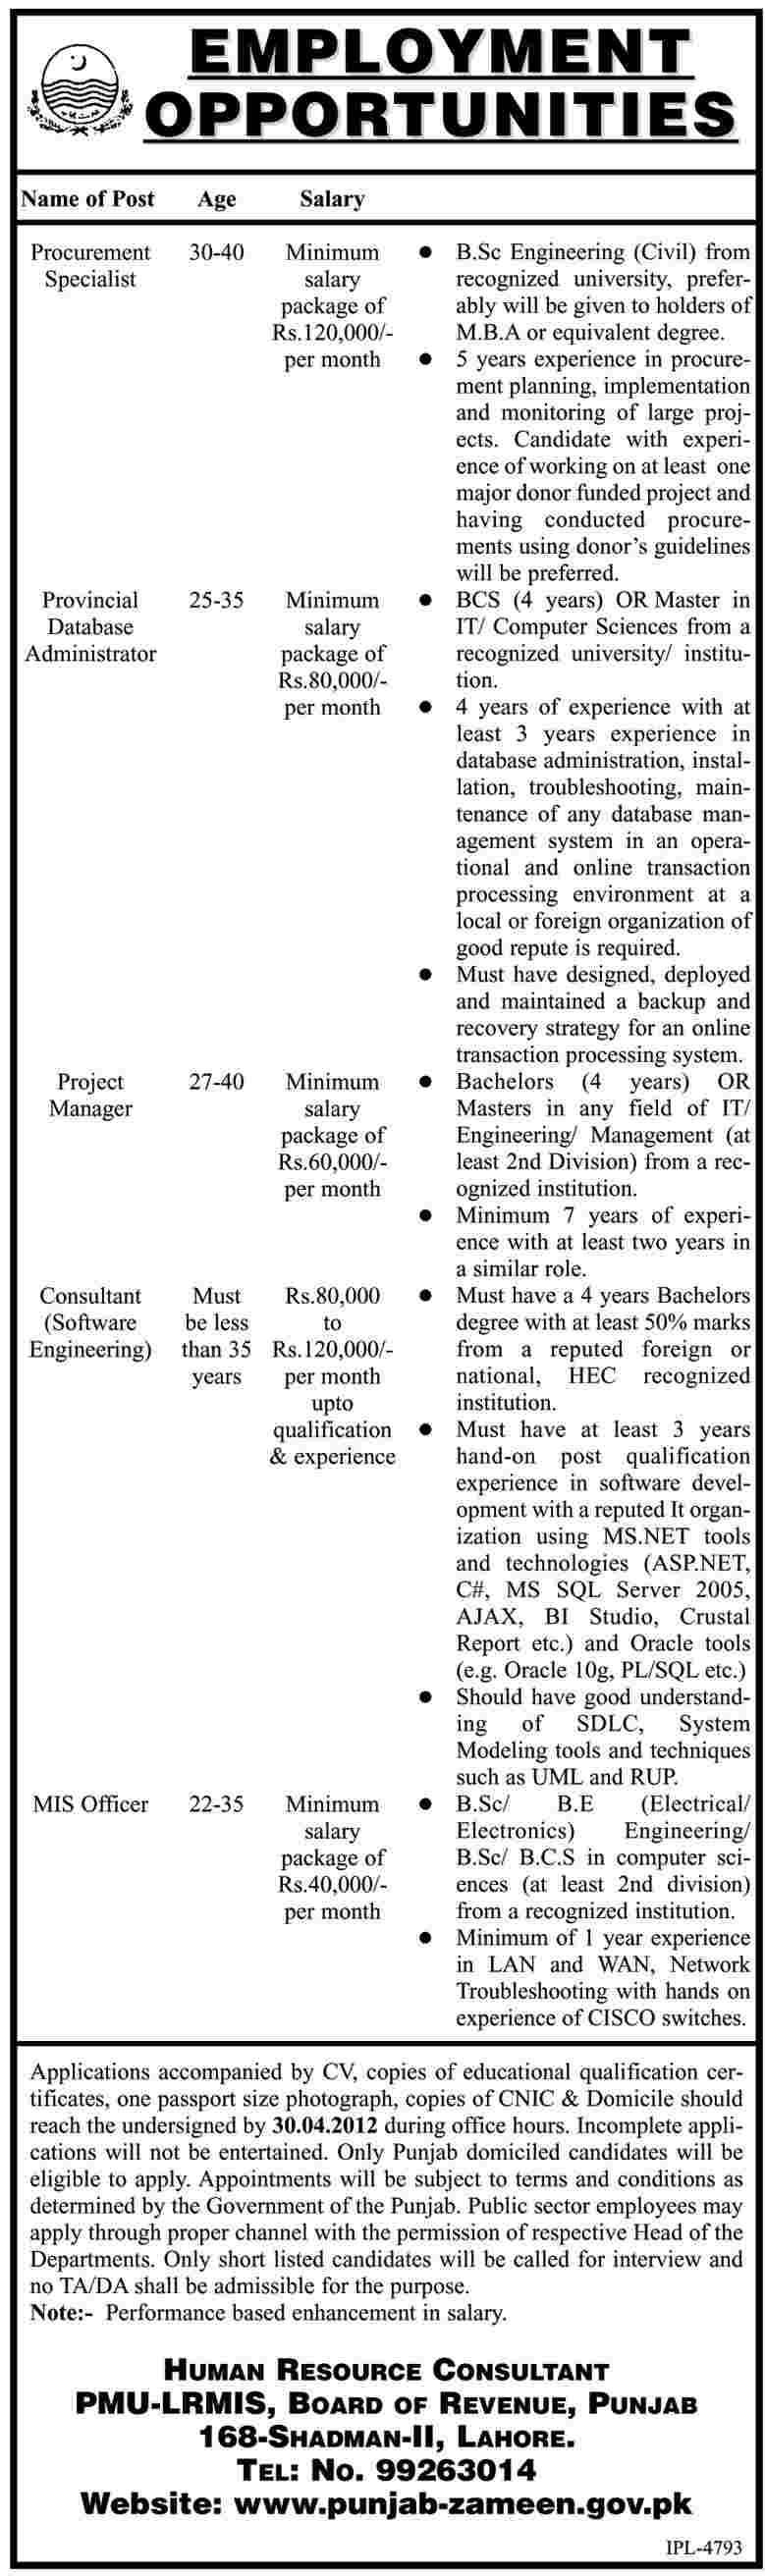 PMU-LRMIS, Board of Revenue, Punjab (Govt.) Jobs